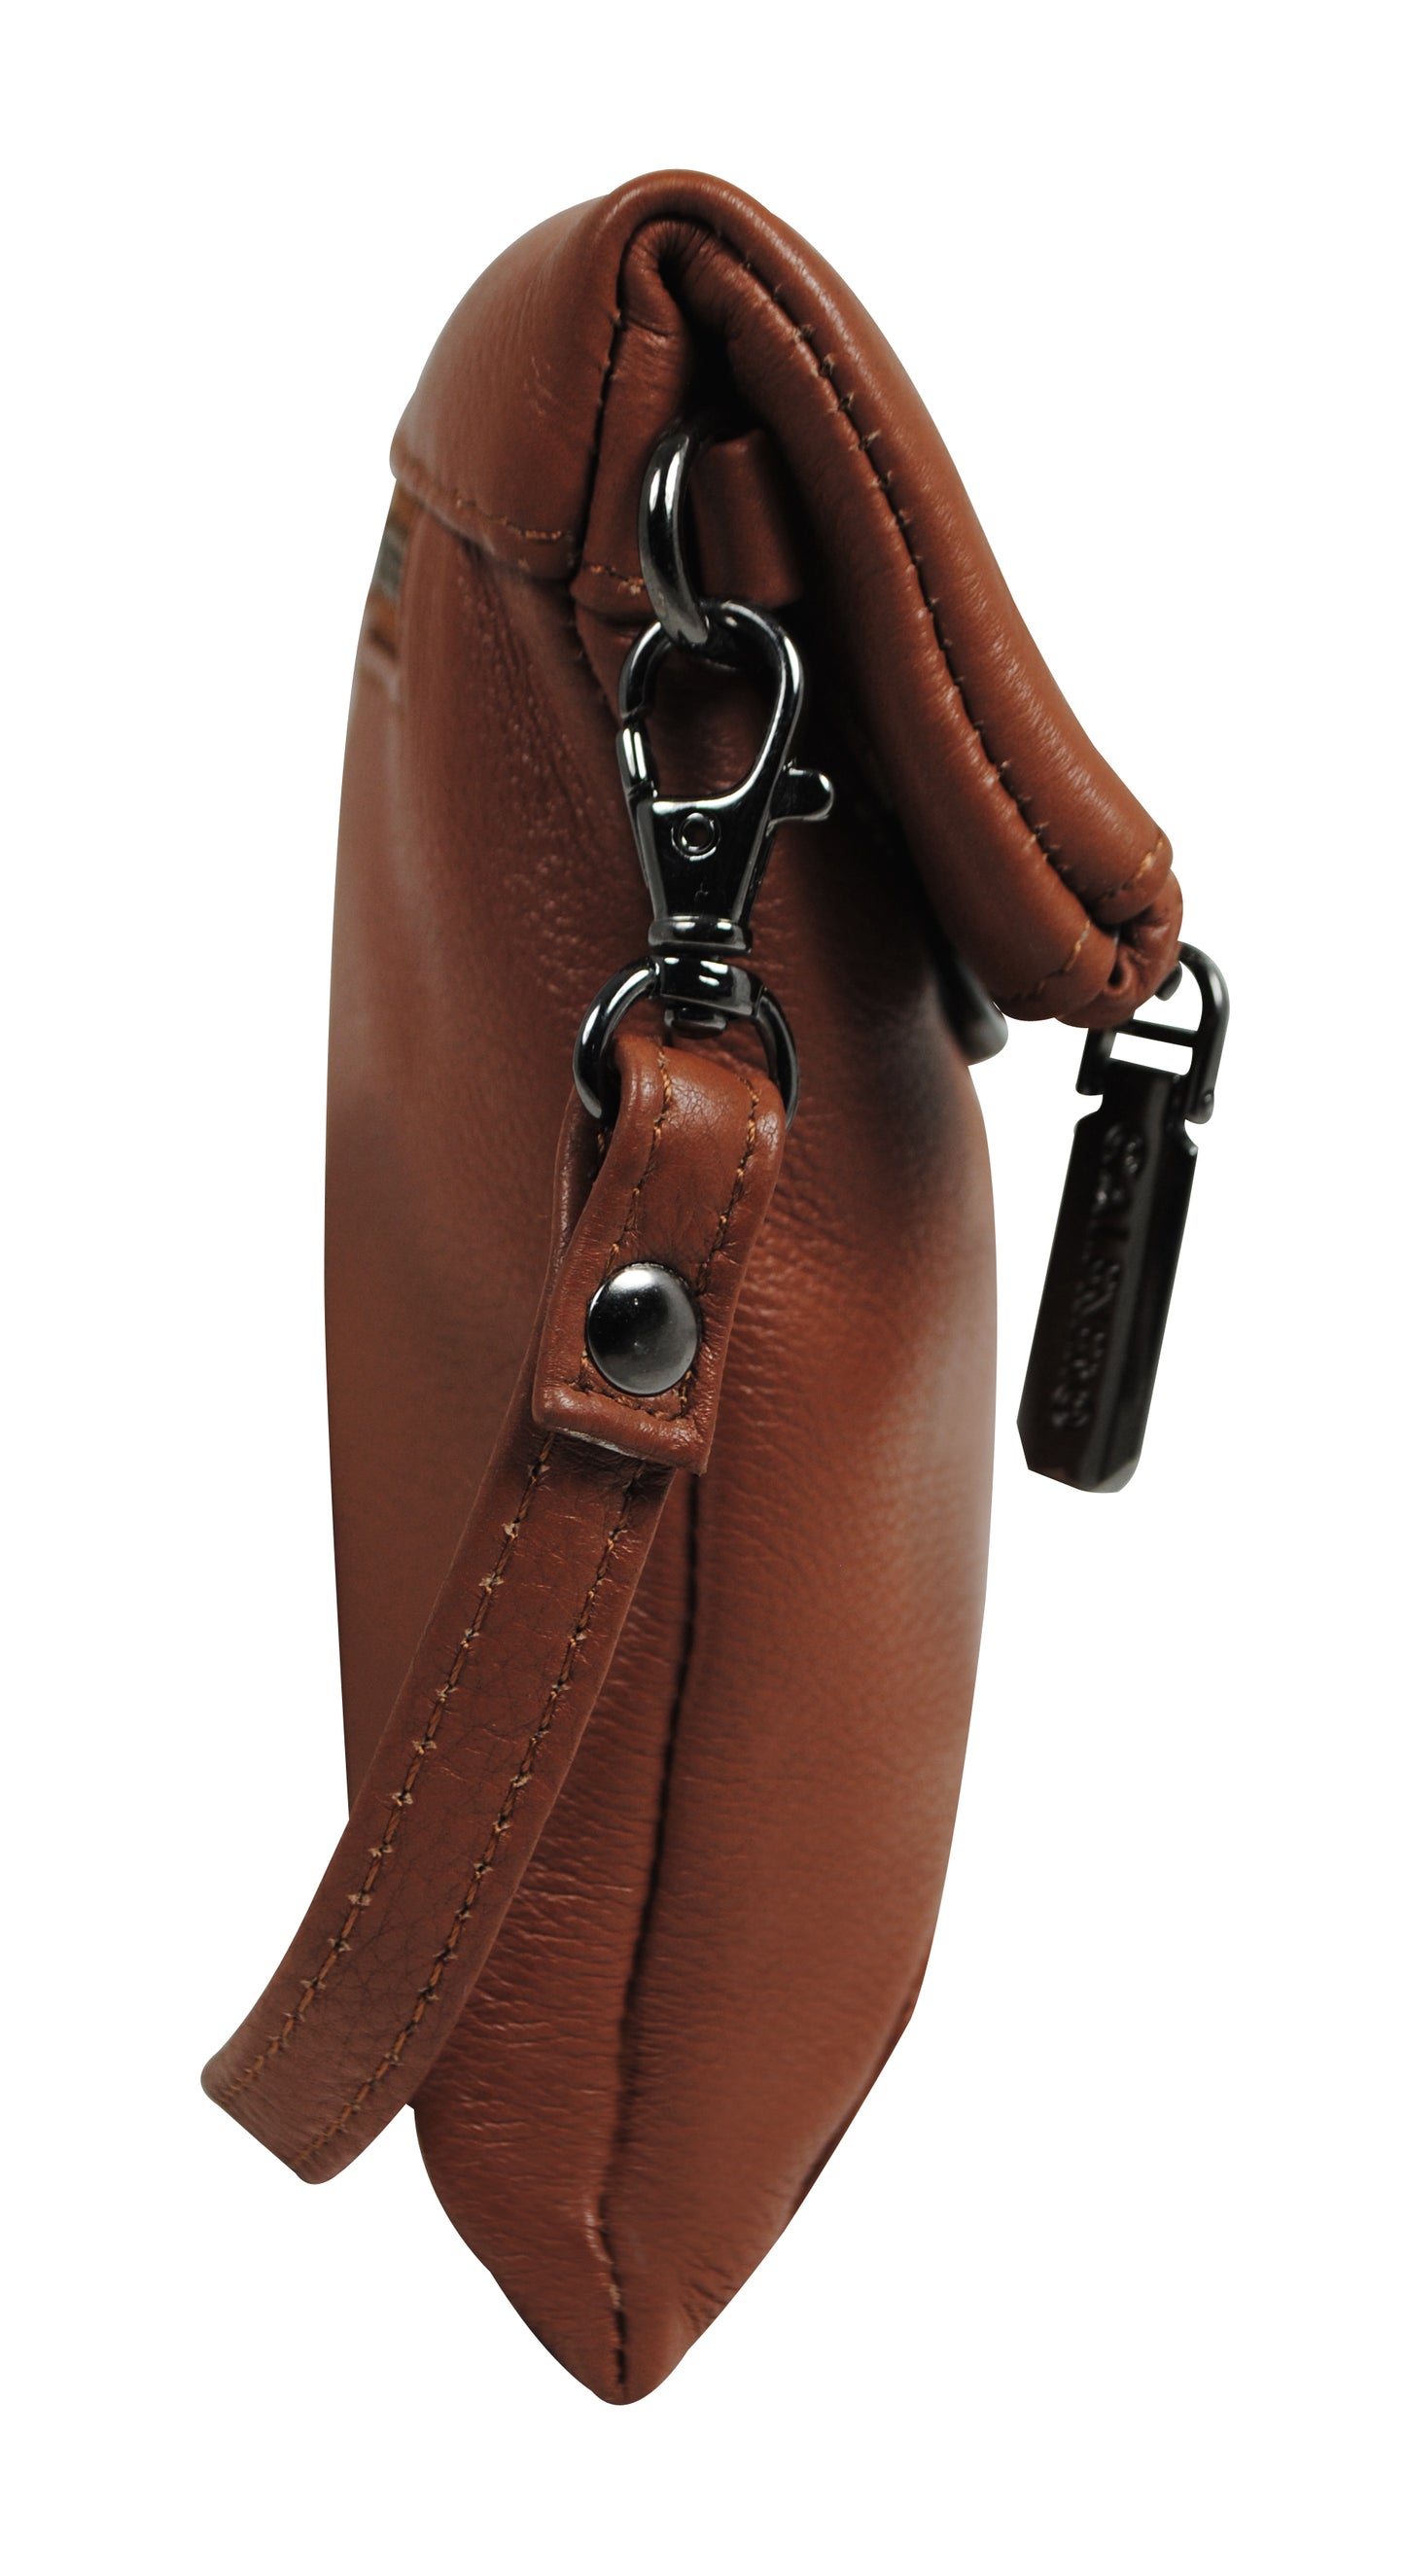 Calfnero Genuine Leather Women's Sling Bag (71176-Camel)